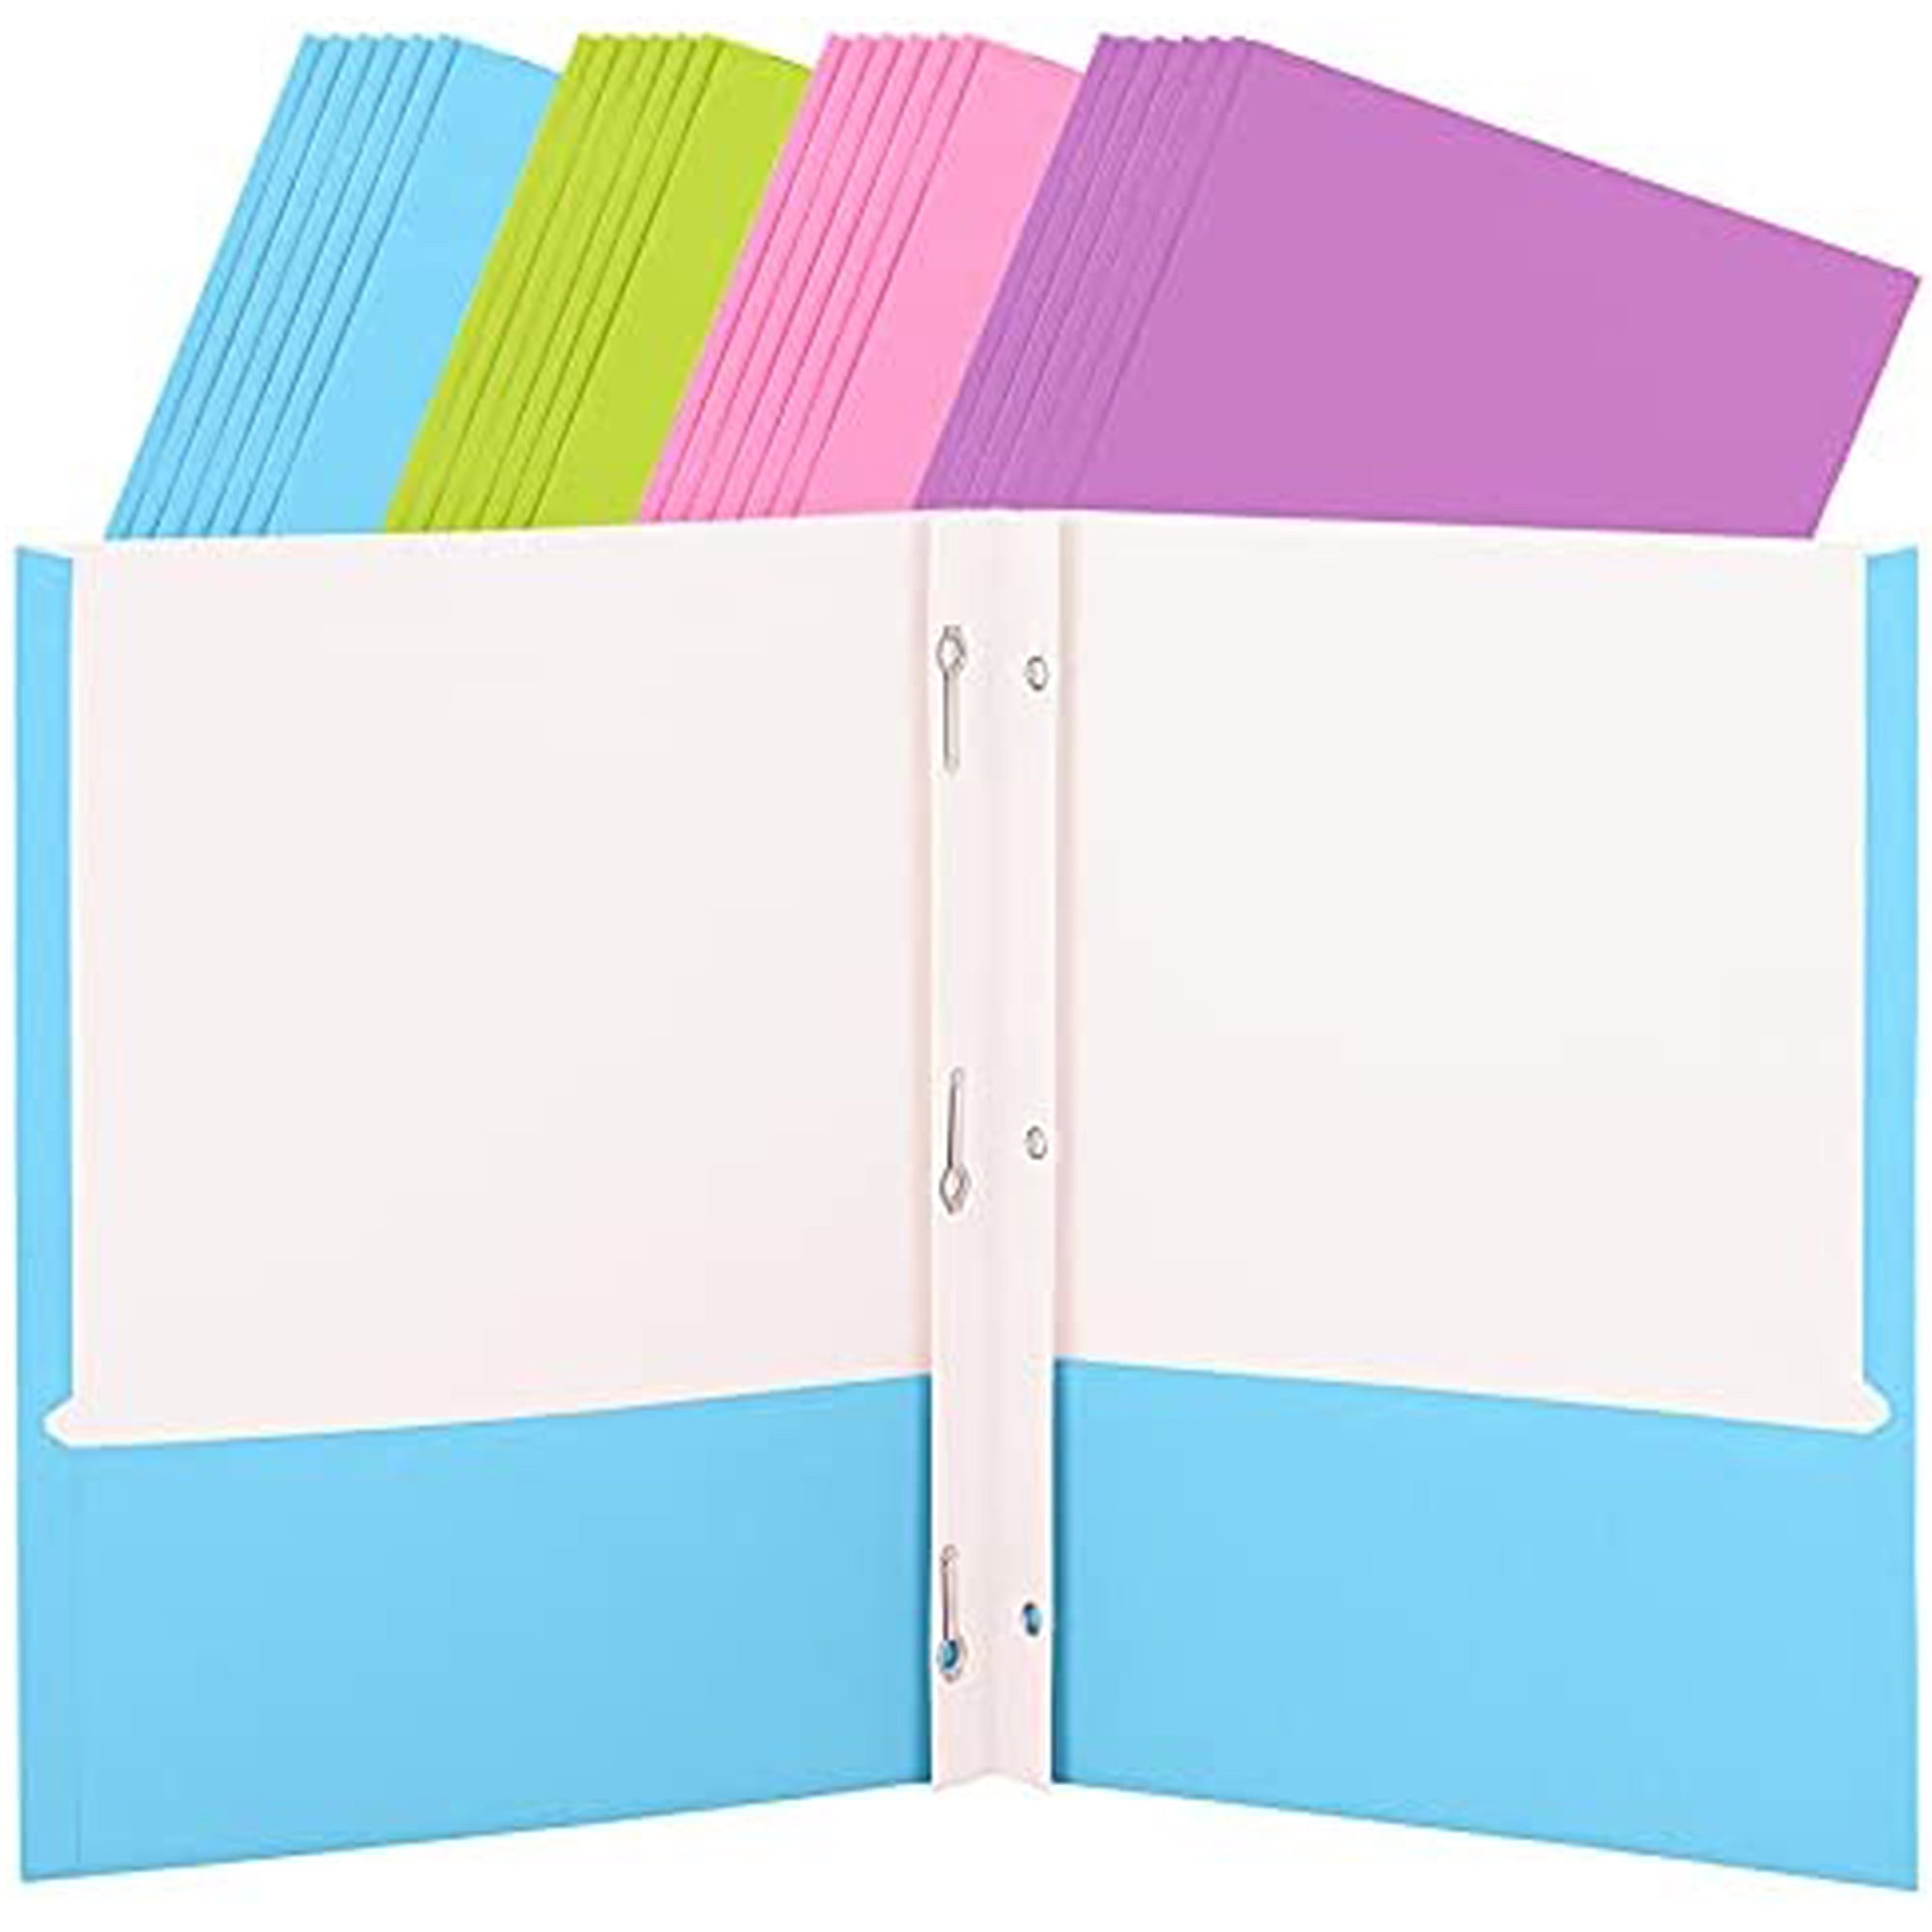 Enday Folder With Pockets And Prongs 2 Pocket Portfolio Folder For